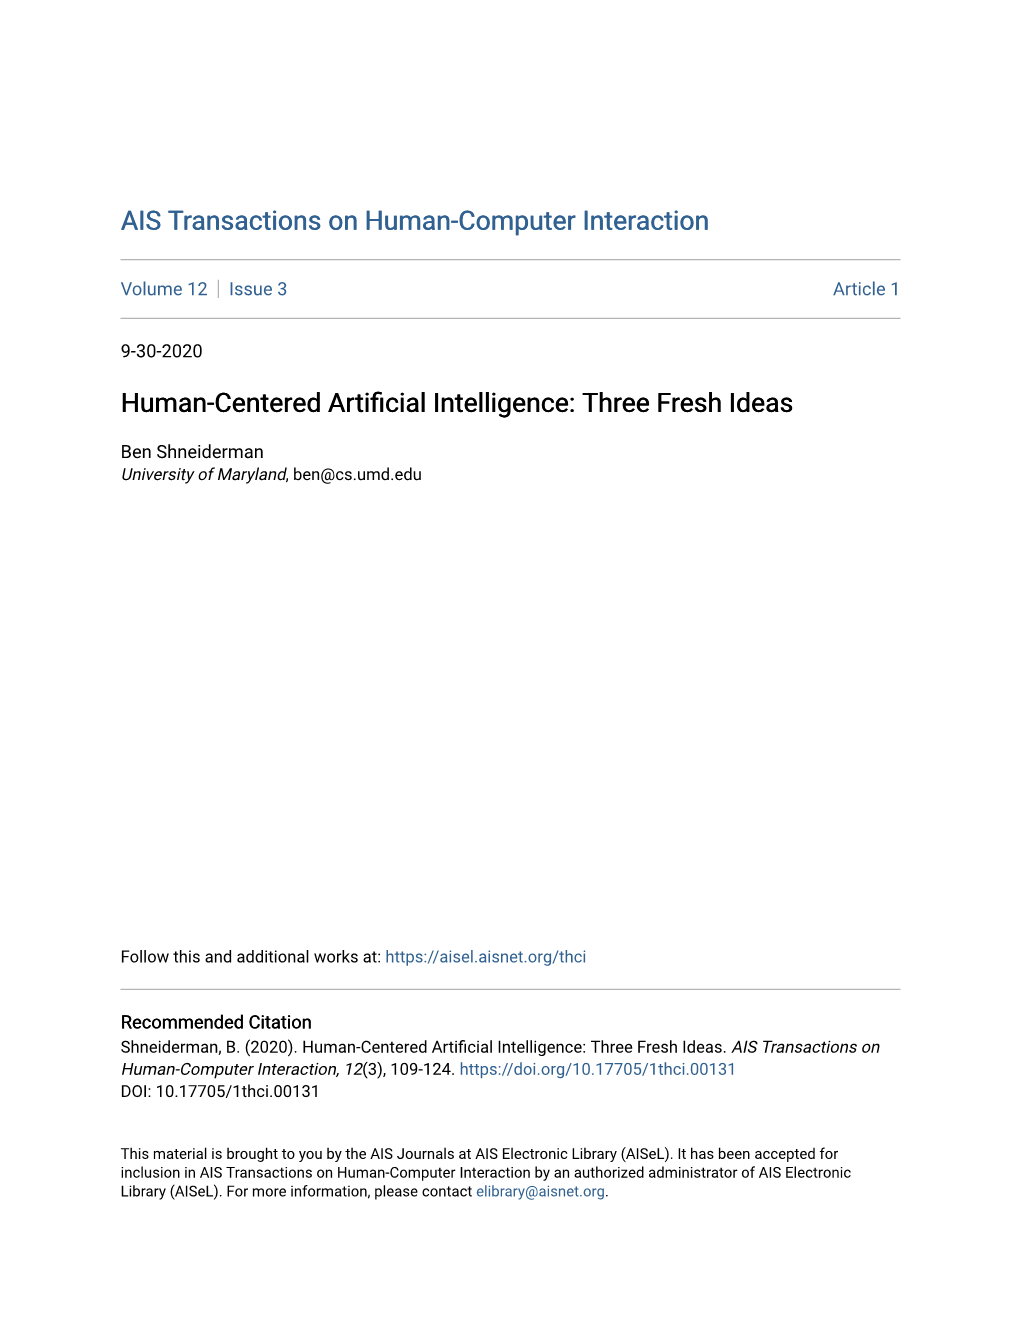 Human-Centered Artificial Intelligence: Three Fresh Ideas